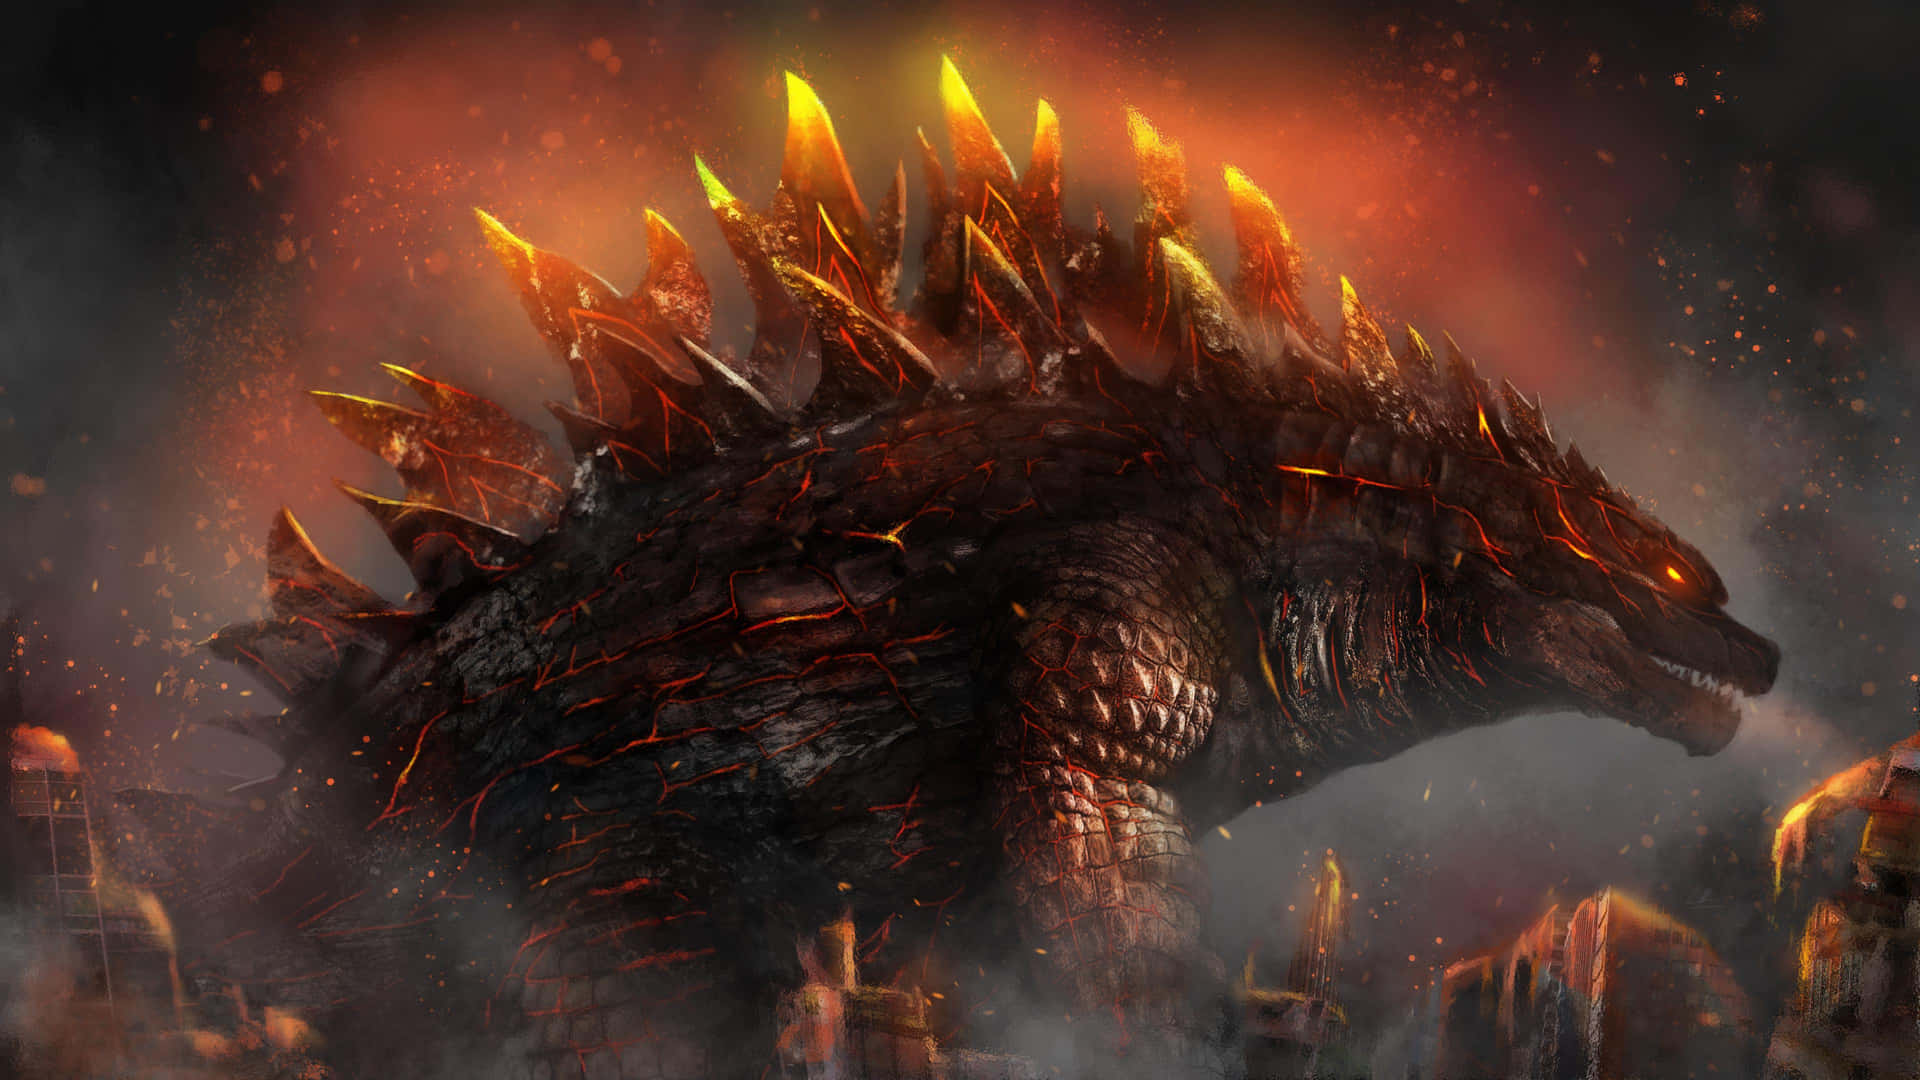 Intense Battle: Godzilla 2014 Roaring Through the City Wallpaper